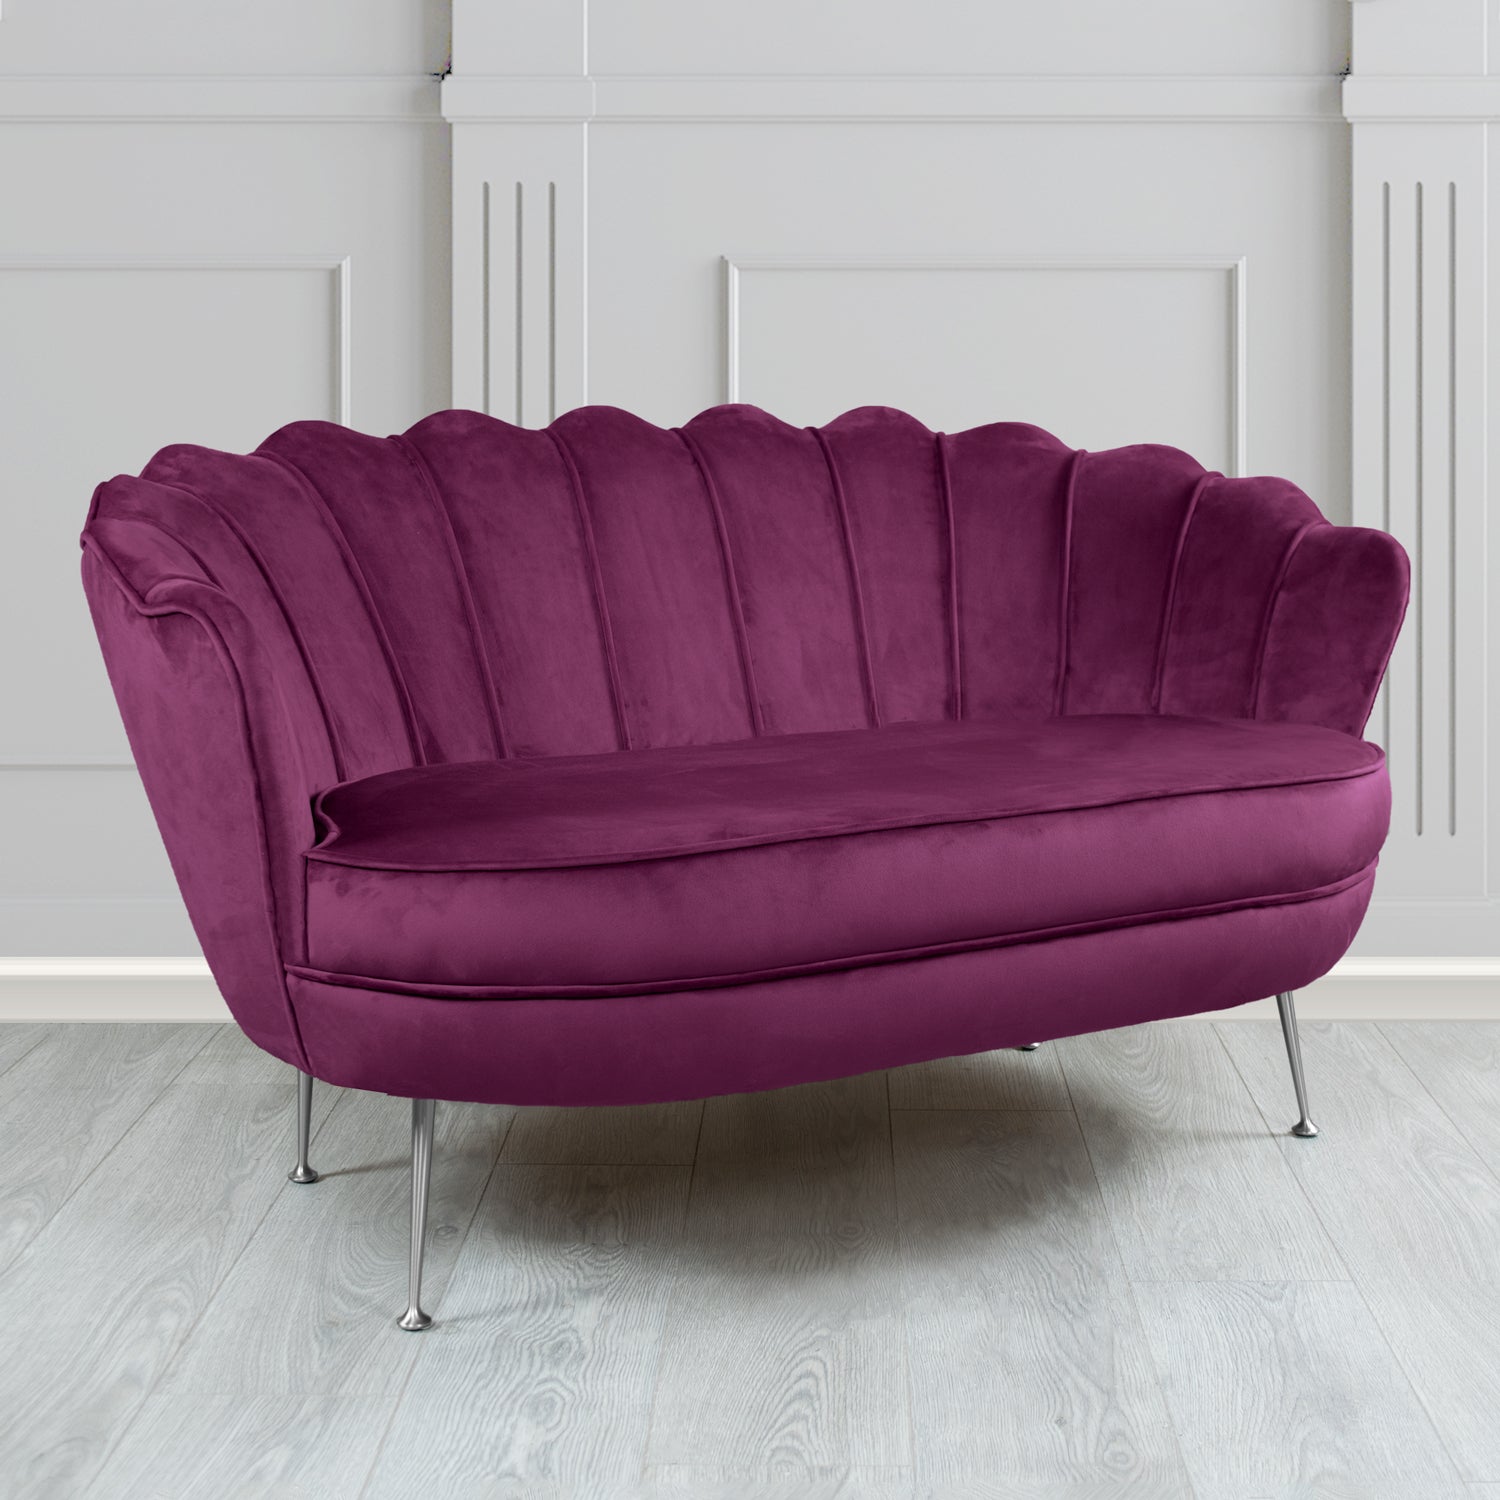 Olivia Monaco Amethyst Plain Velvet Fabric 2 Seater Shell Sofa - The Tub Chair Shop